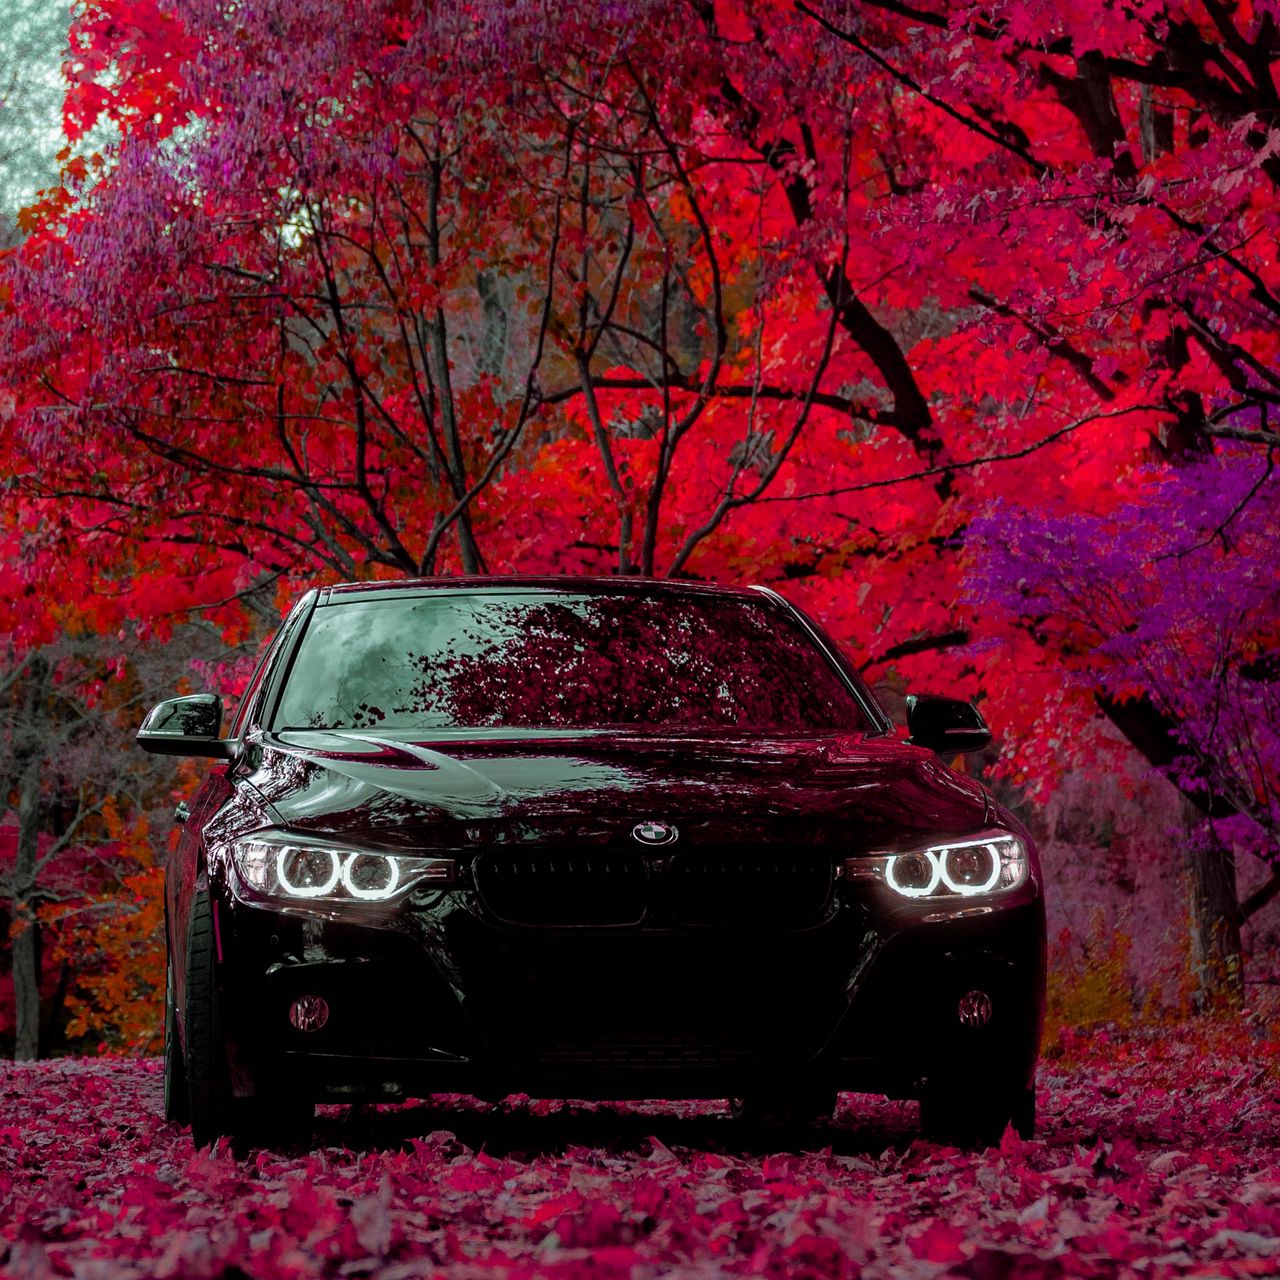 HD wallpaper: BMW 335i F30 Car Tuning City